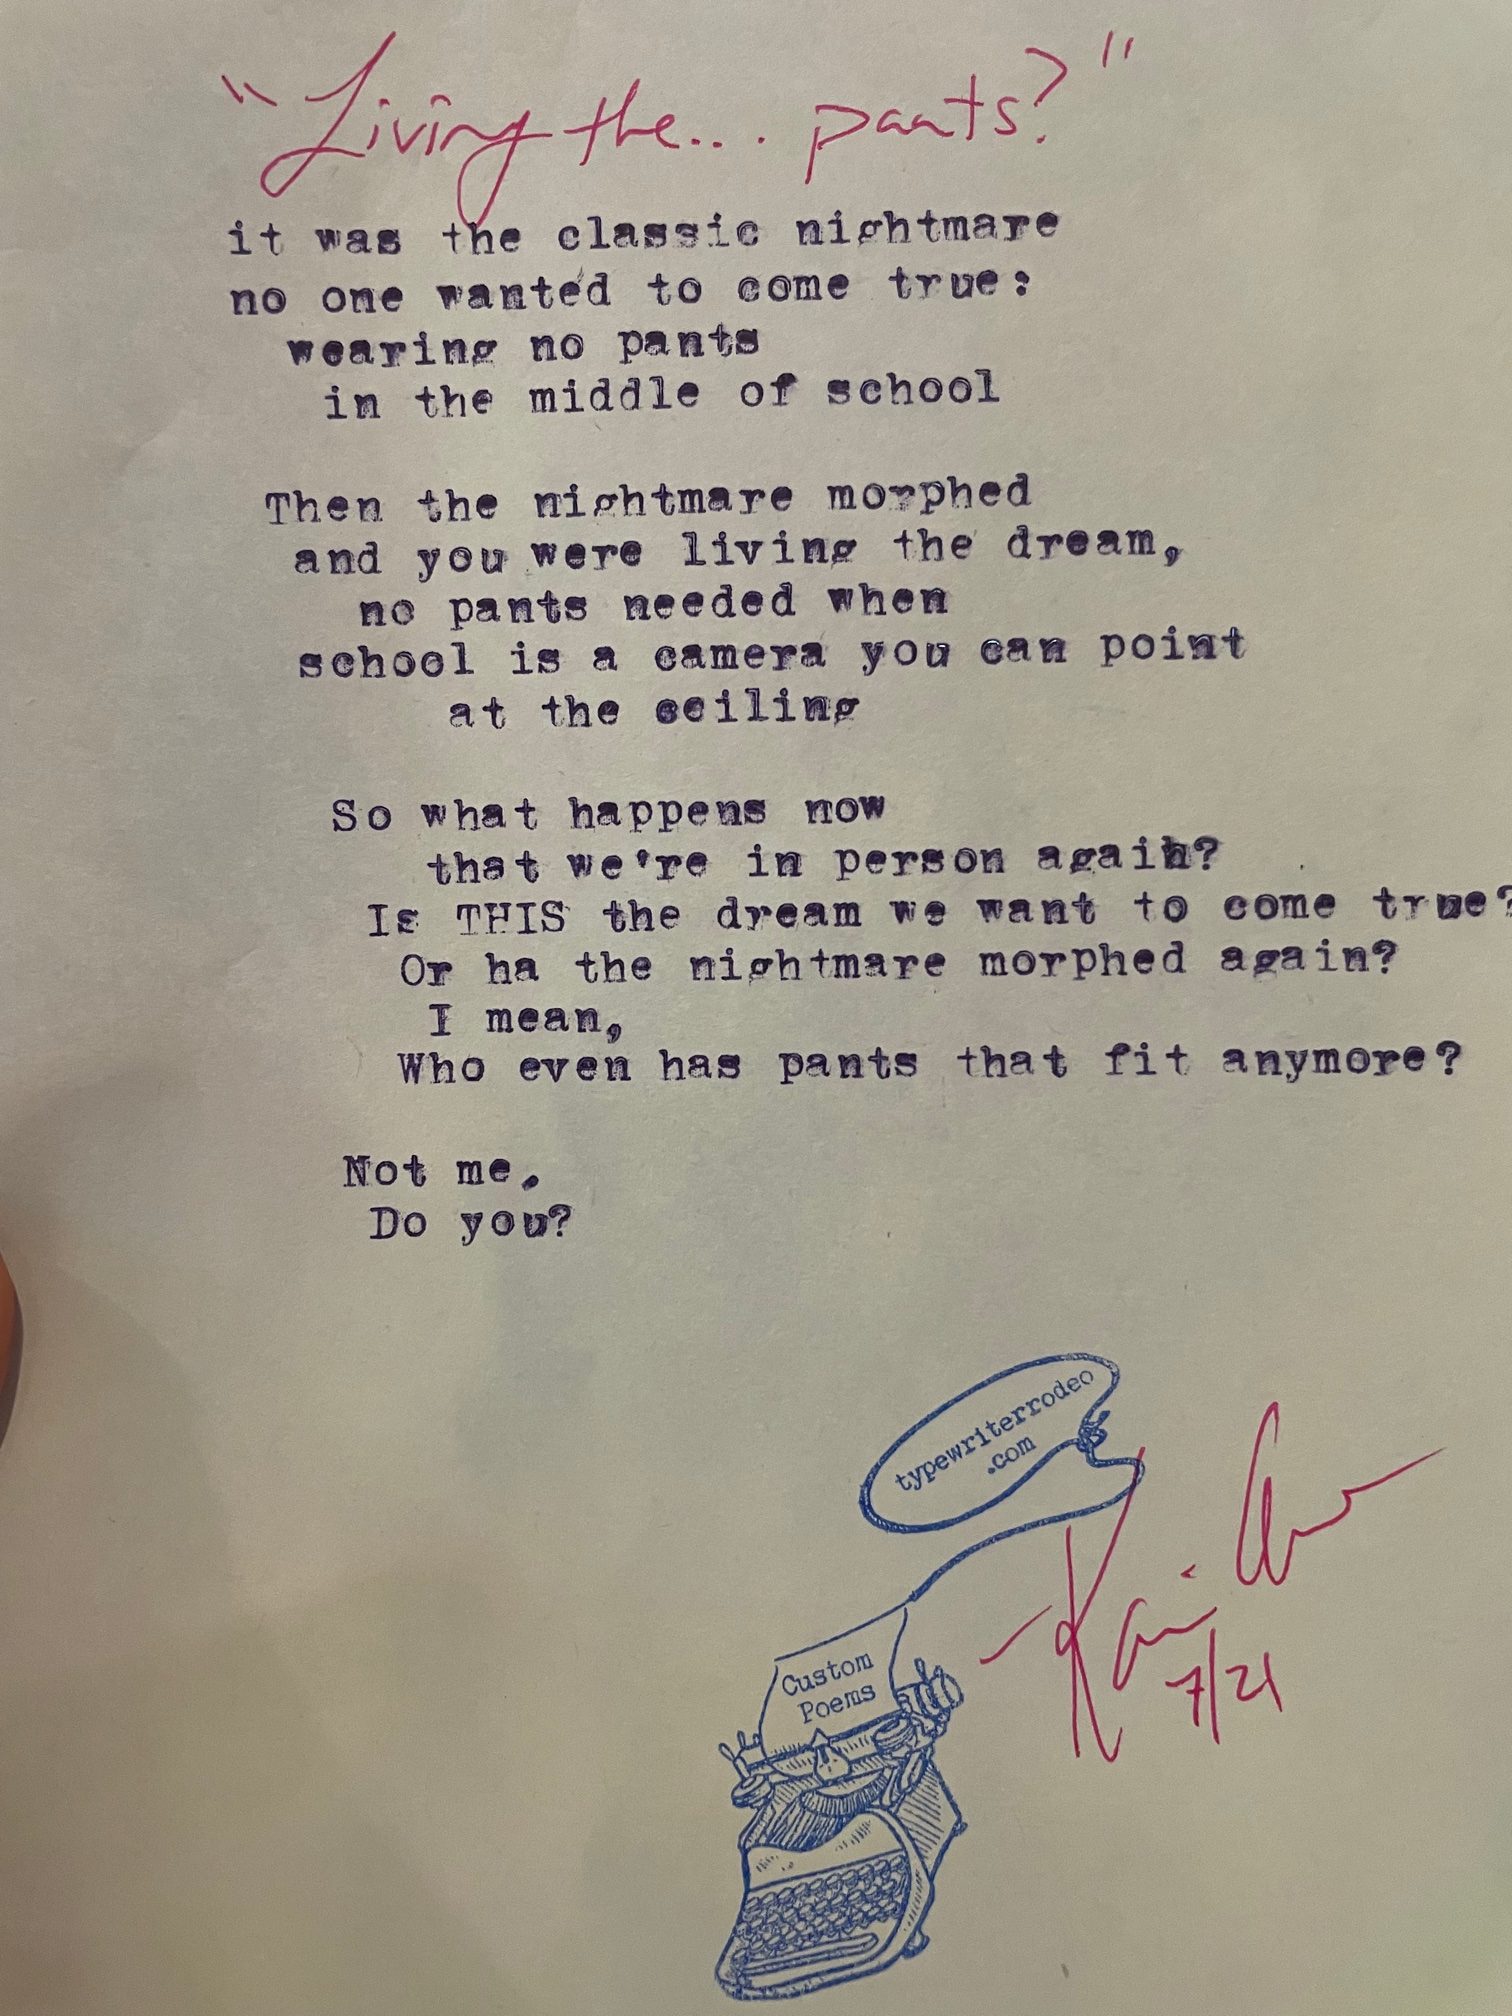 photo of the typewritten poem